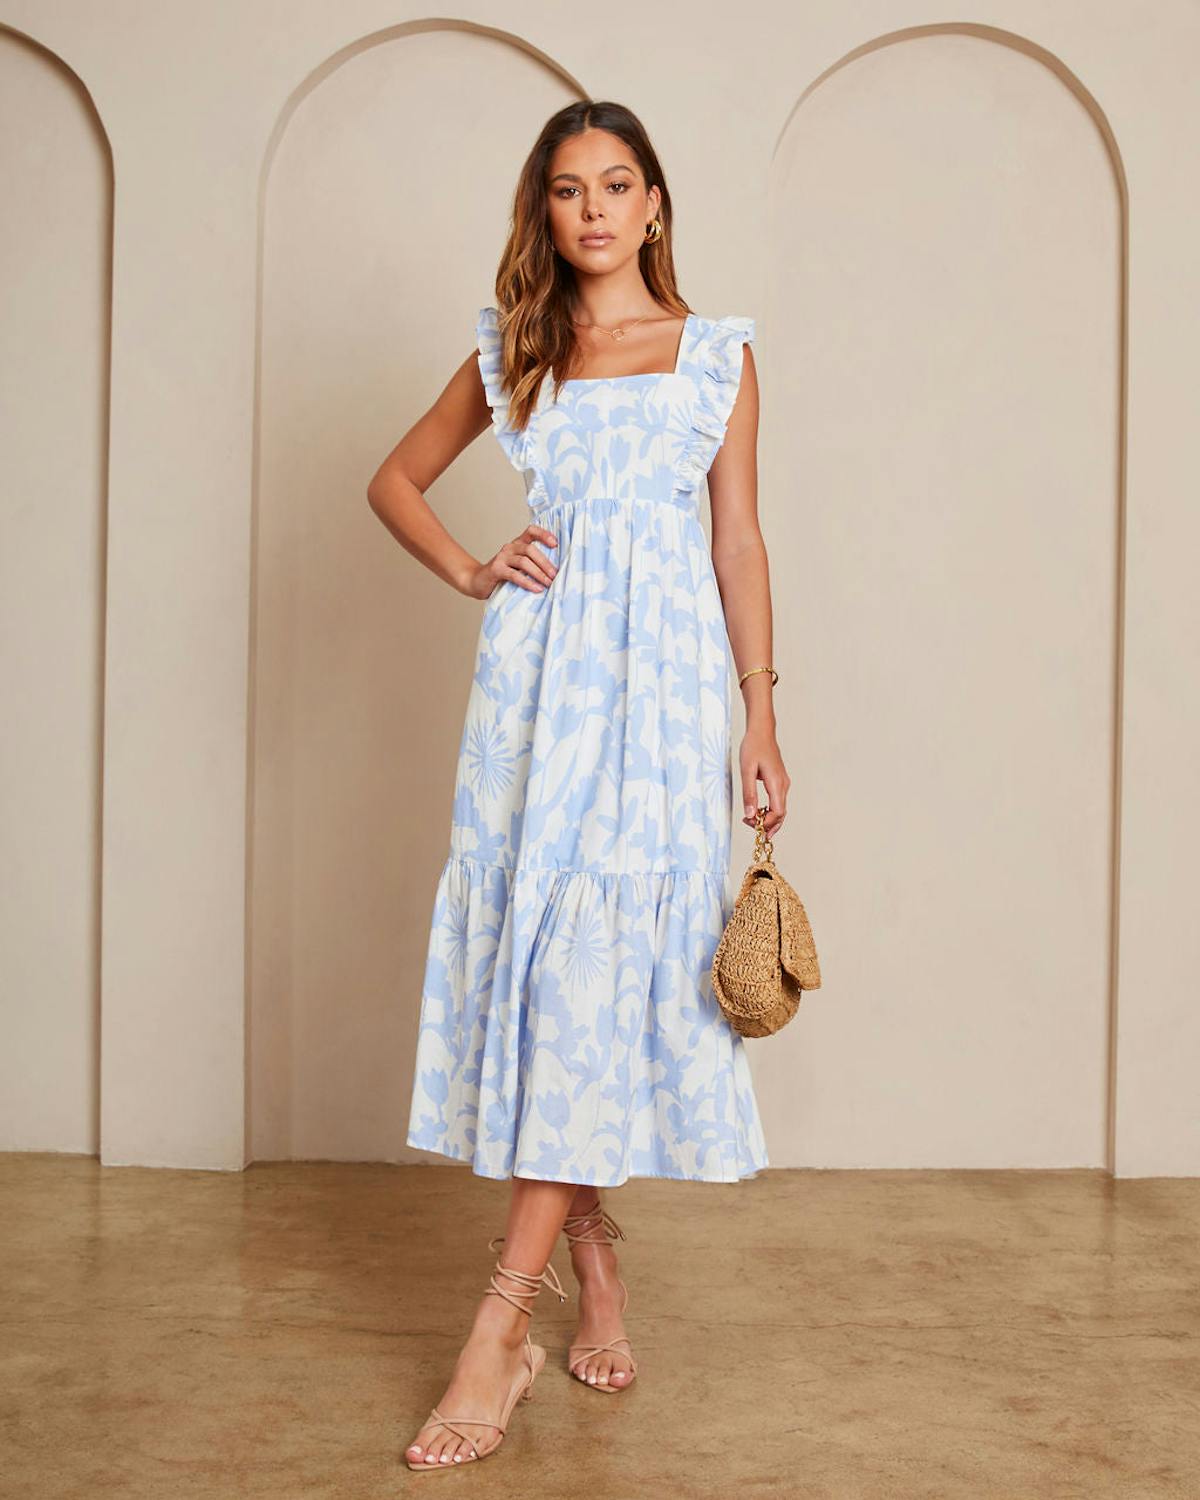 Roe Cotton Floral Midi Dress - Light Blue/White view 1